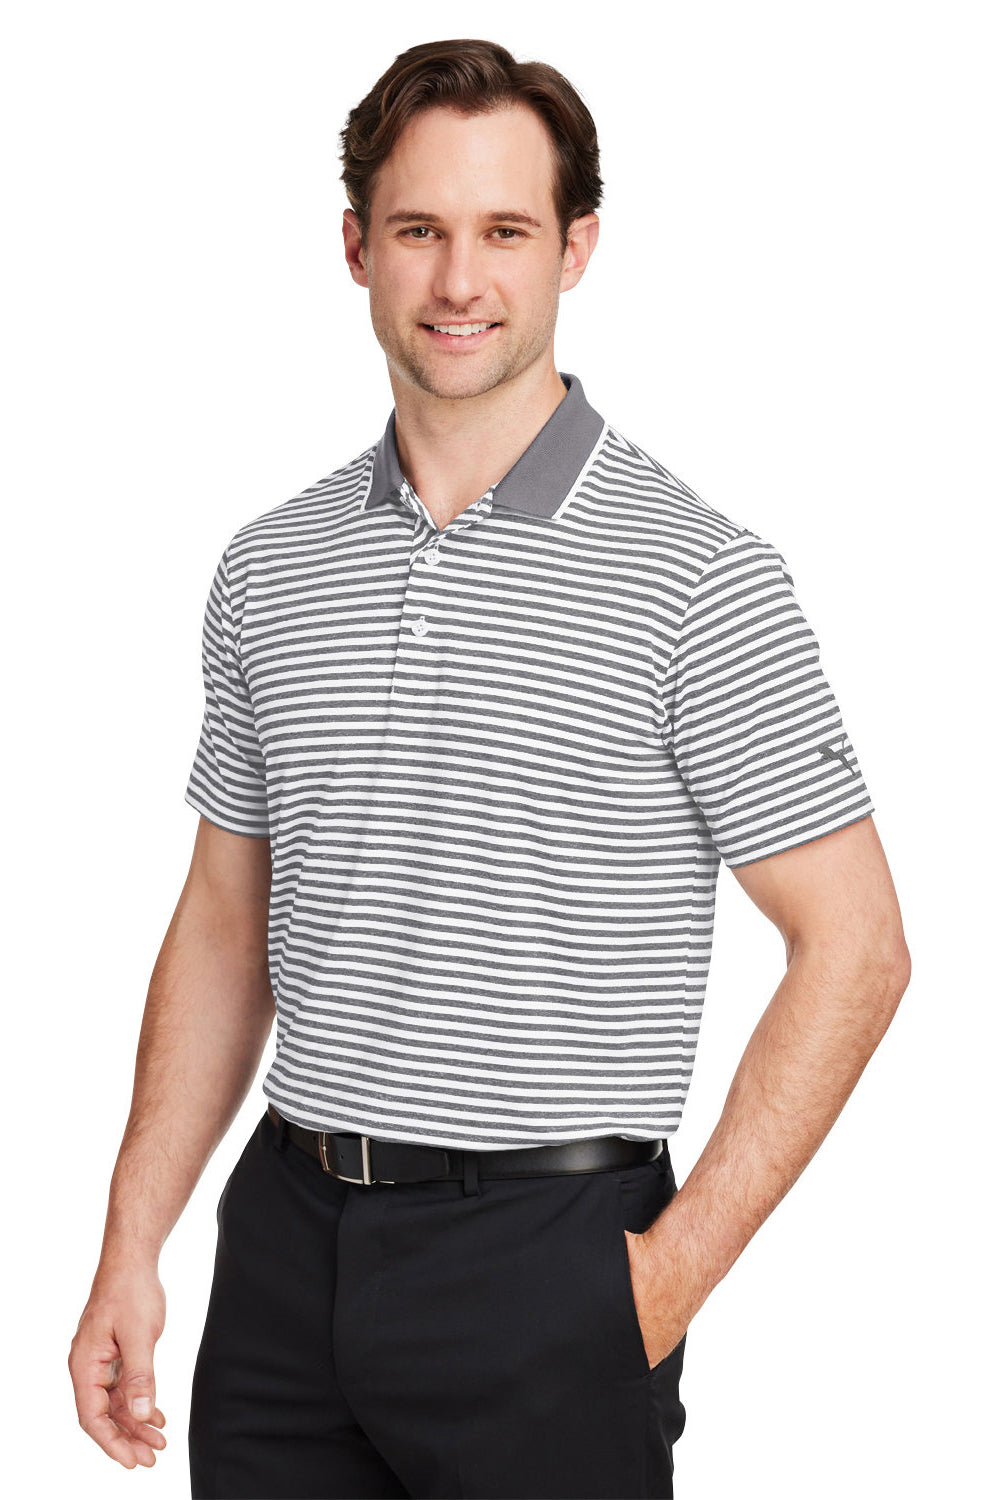 Puma 537447 Mens Mattr Feeder Short Sleeve Polo Shirt Quiet Shade Grey 3Q